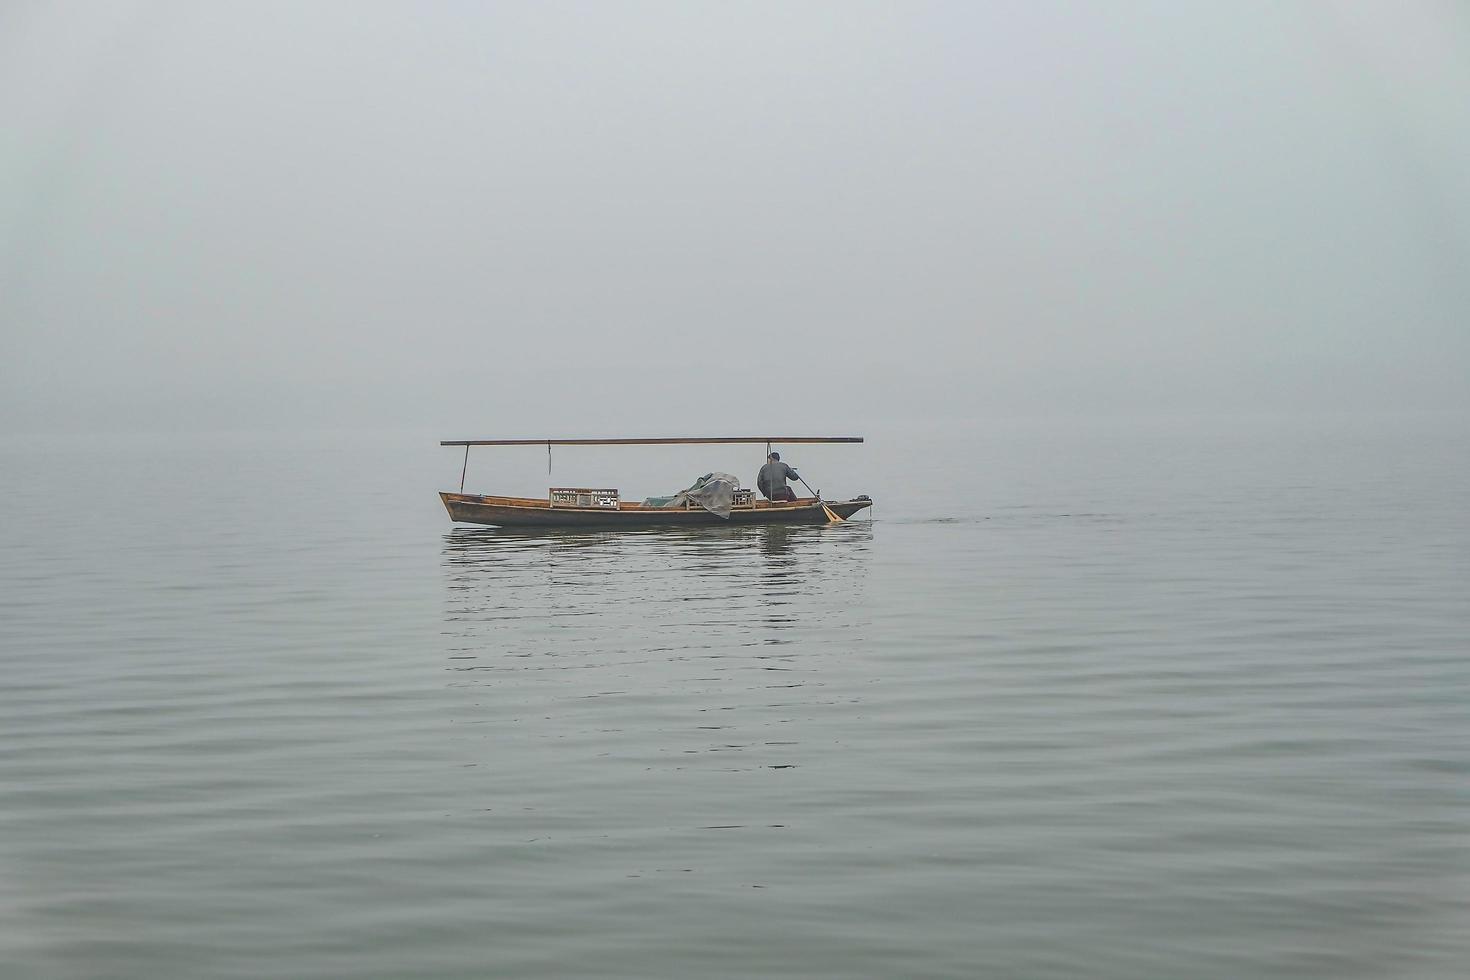 One Boat on beautfiul Xihu lake West Lake one of destination in china with foggy or mist in winter season,hangzhou china photo